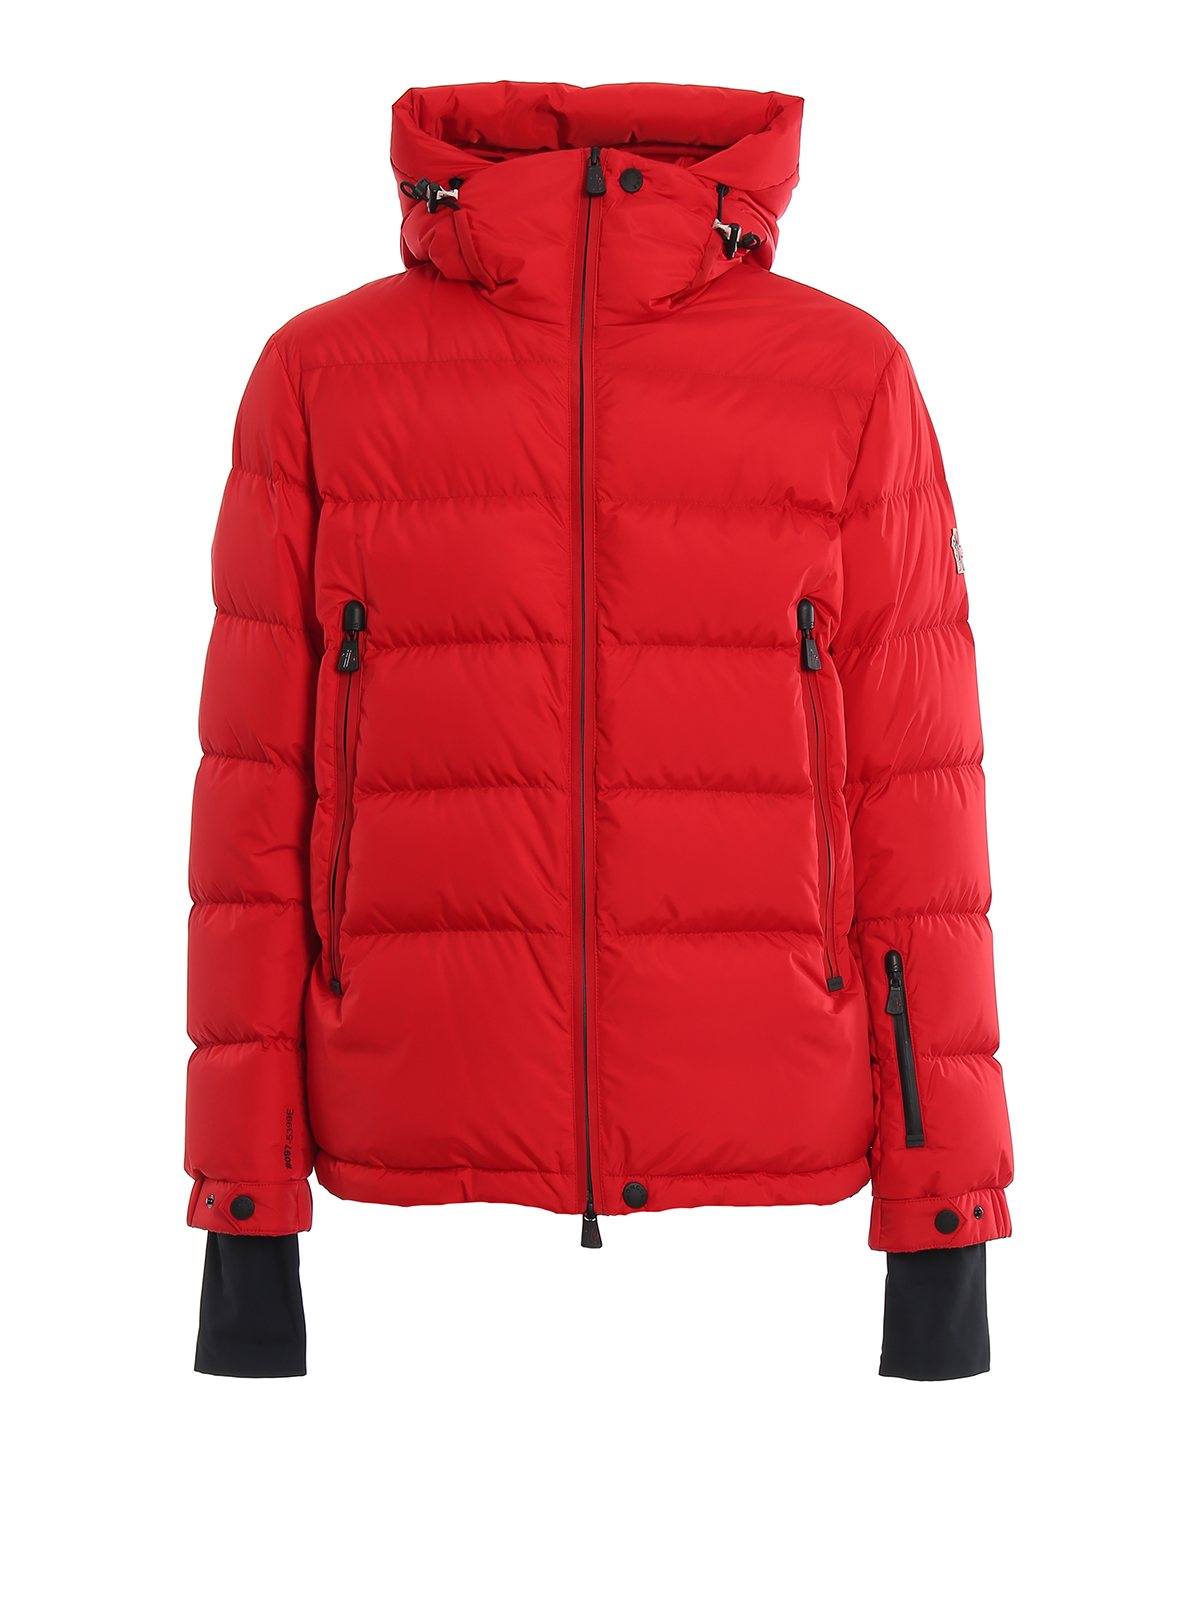 Moncler Grenoble Isorno Red Puffer Jacket | ModeSens